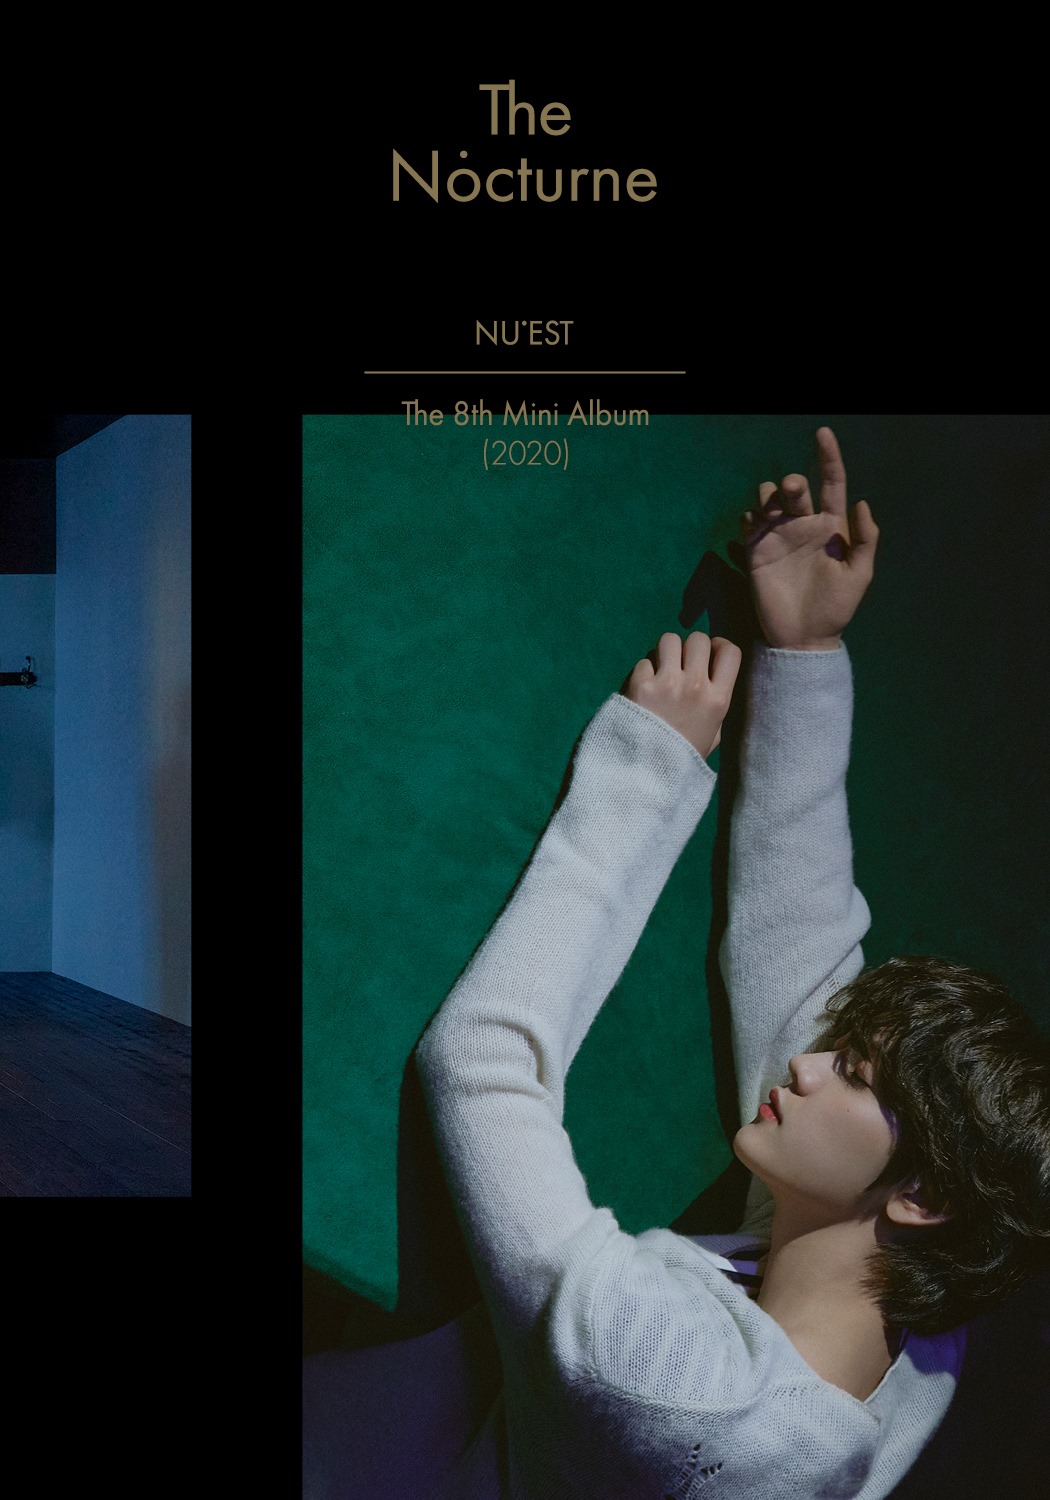 NU'EST, 'The Nocturne' comeback